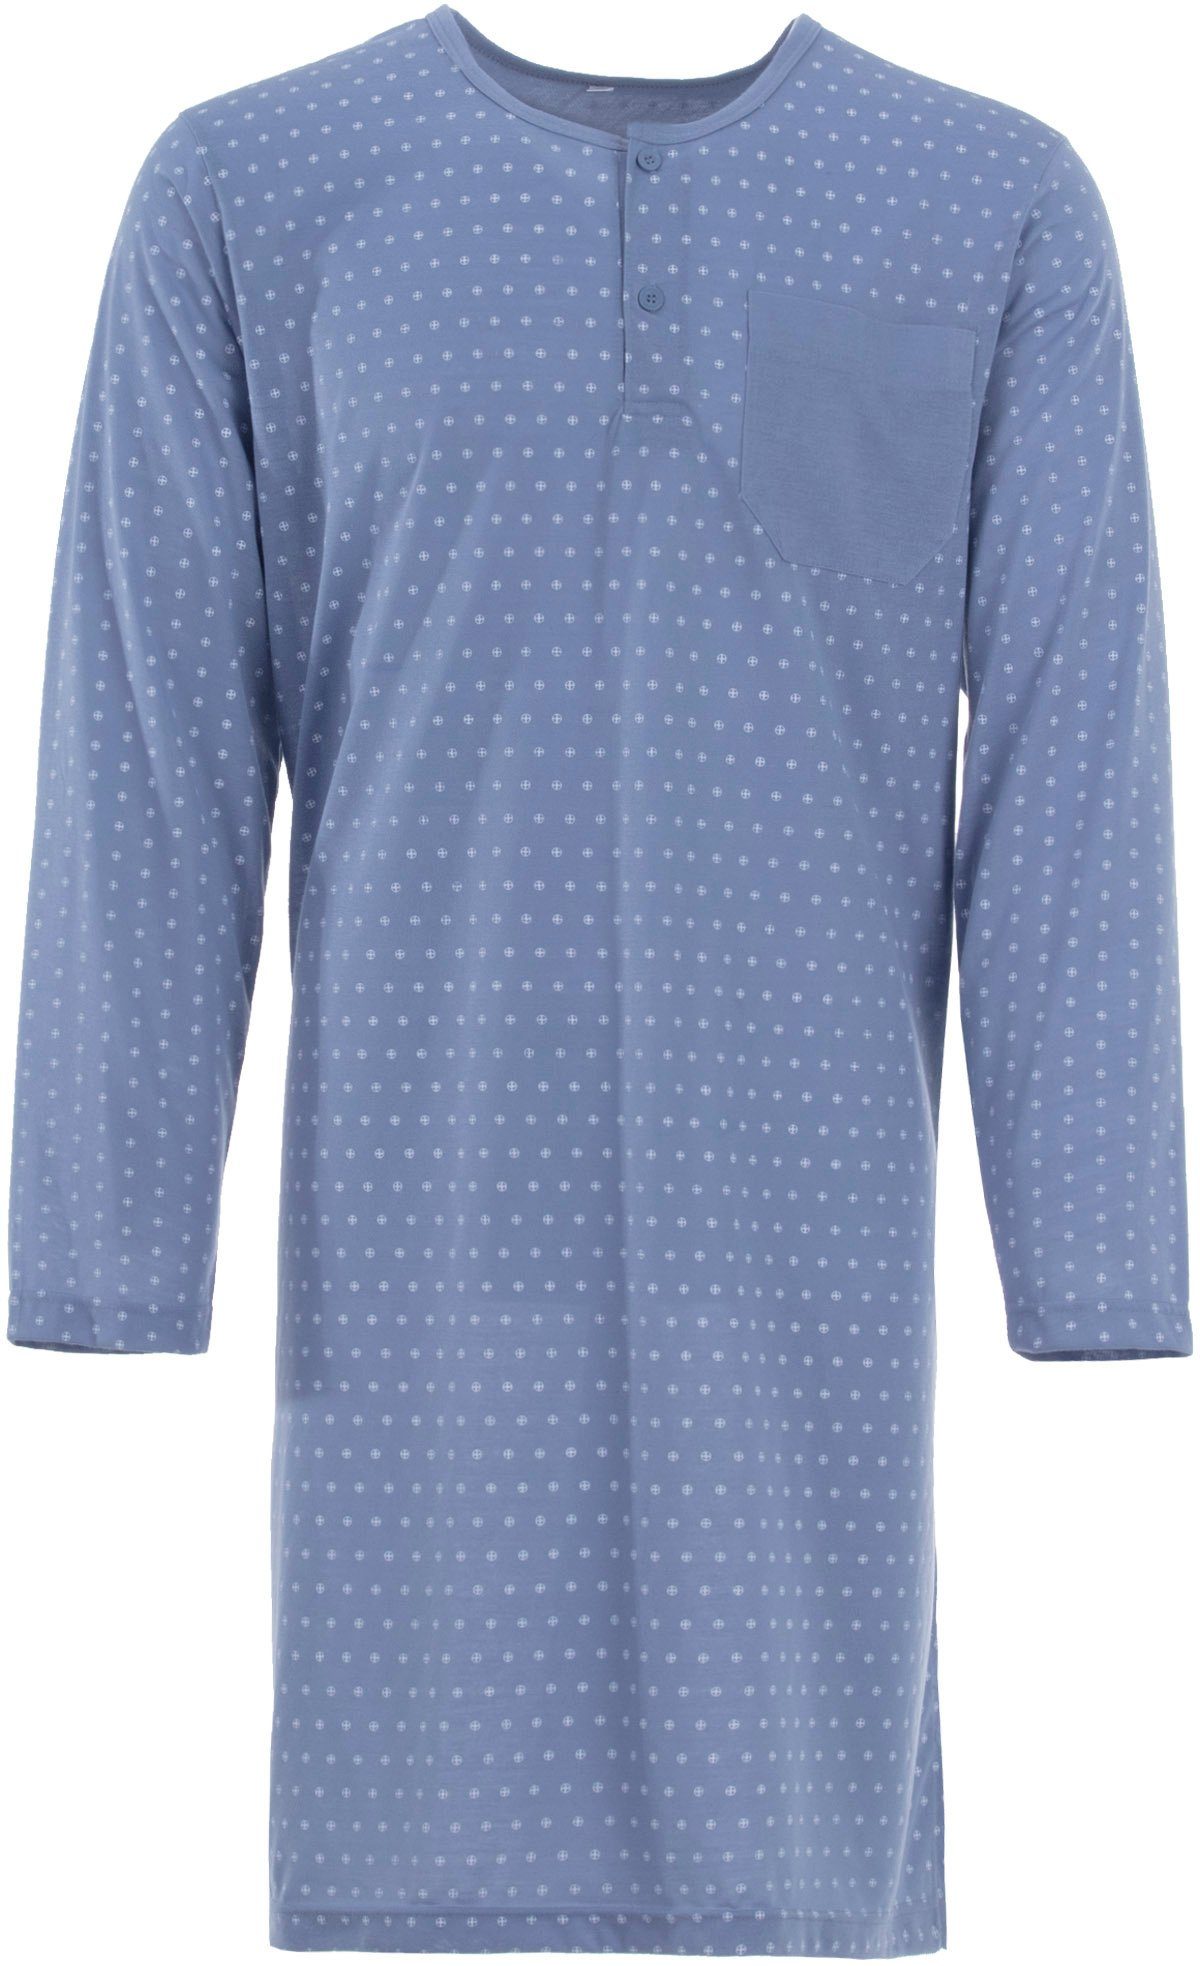 Henry Terre Nachthemd Nachthemd Langarm - Ball graublau